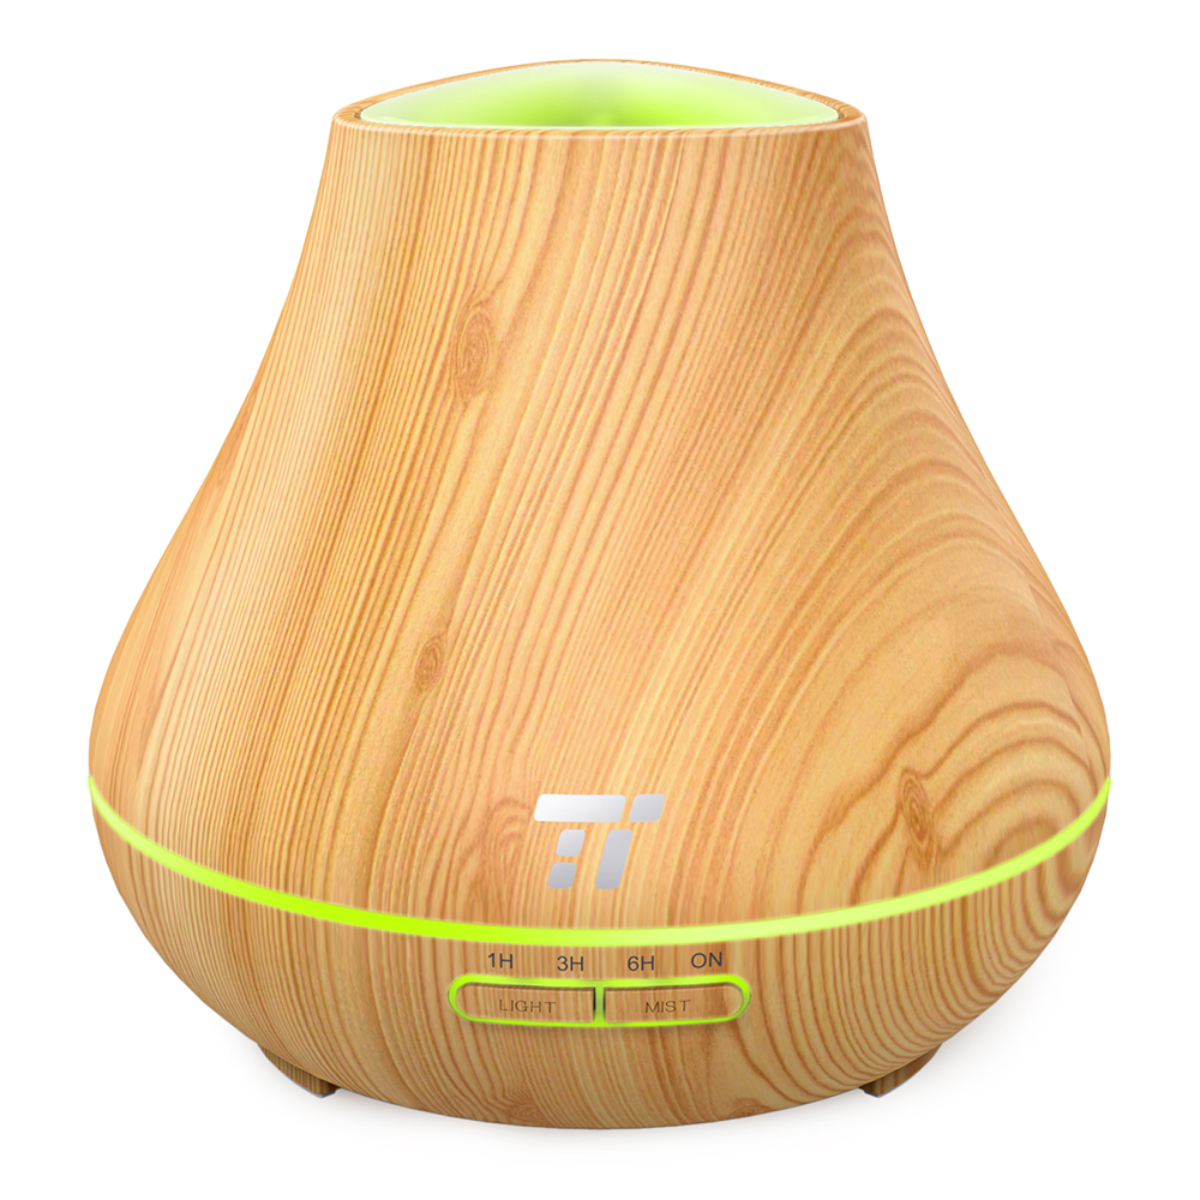 Wood Raumgröße: TT-AD004 20 Luftbefeuchter Light TAOTRONICS (13 m²) Watt,